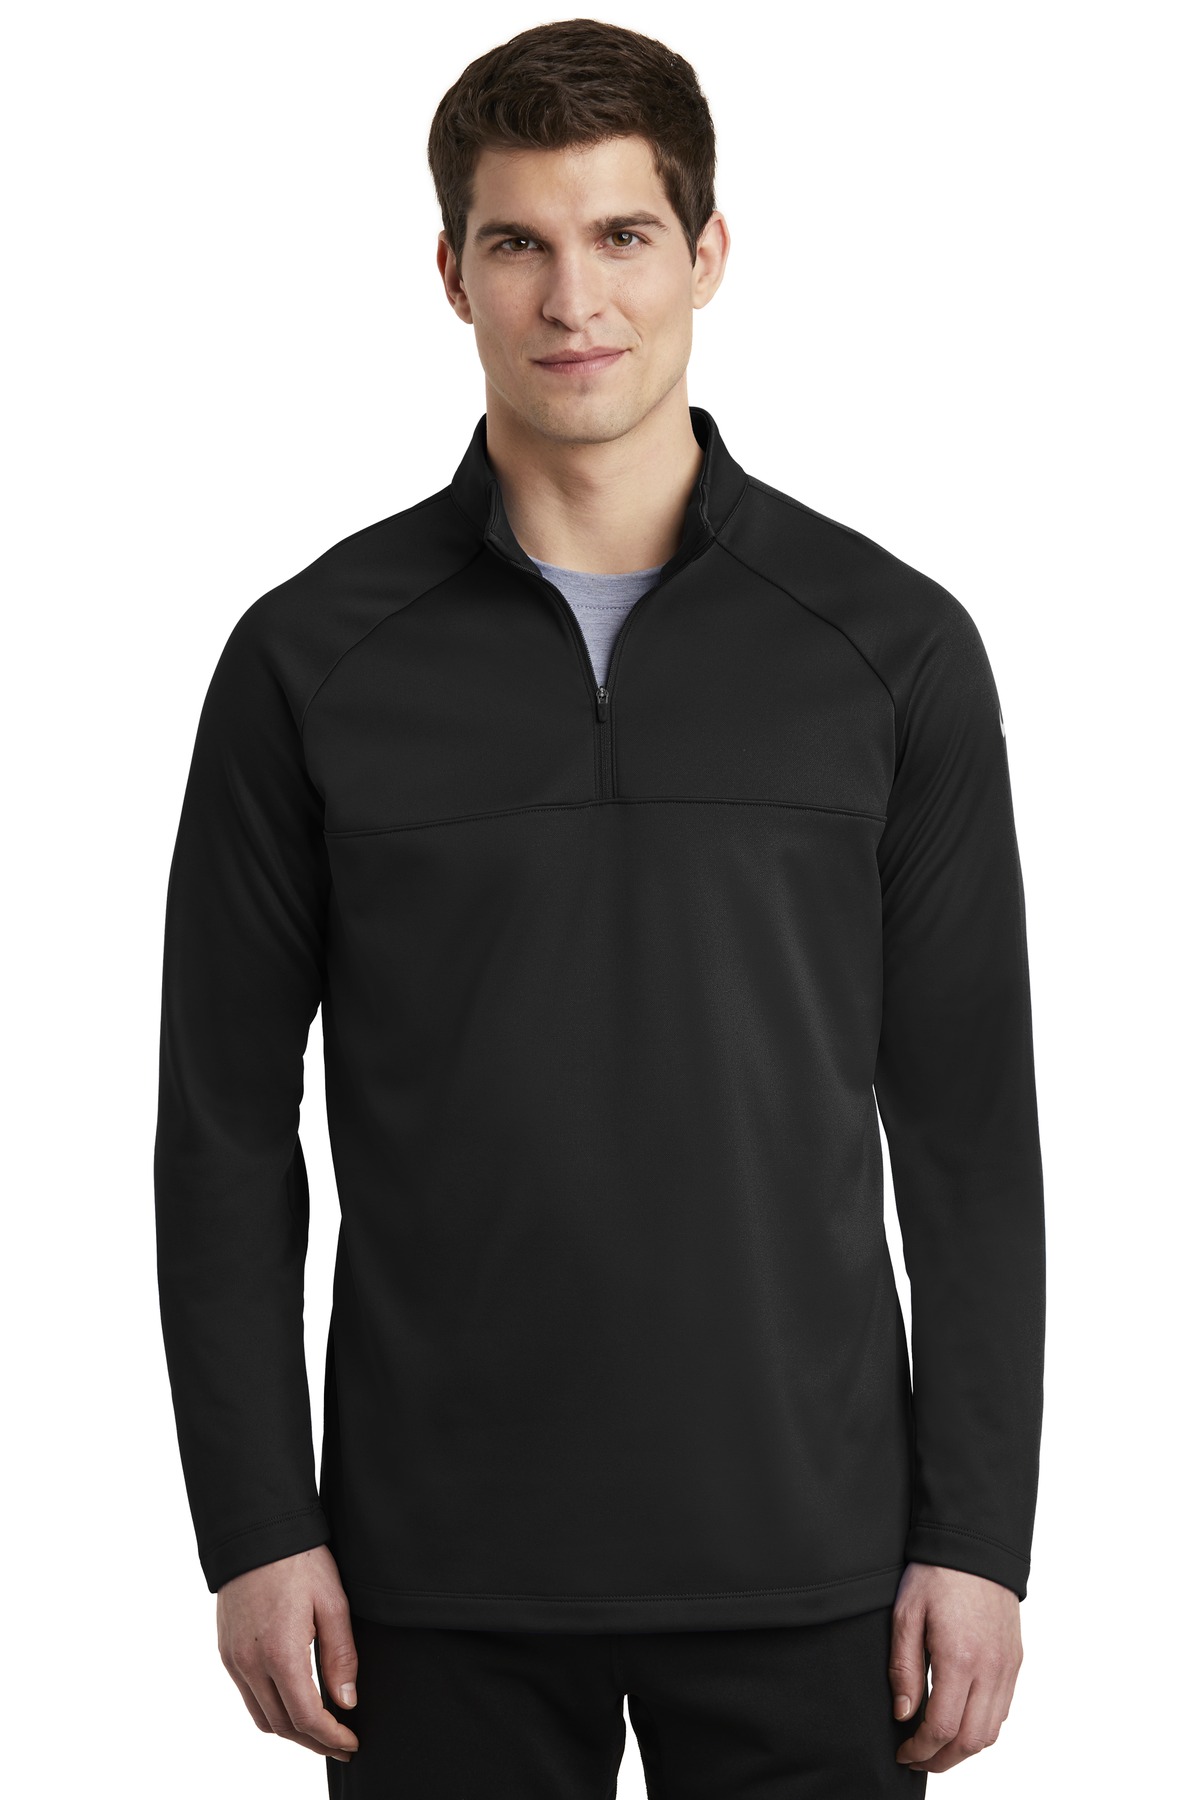 Nike Outerwear, Sweat shirts & Fleece for Hospitality Therma-FIT 1/2-Zip Fleece.-Nike